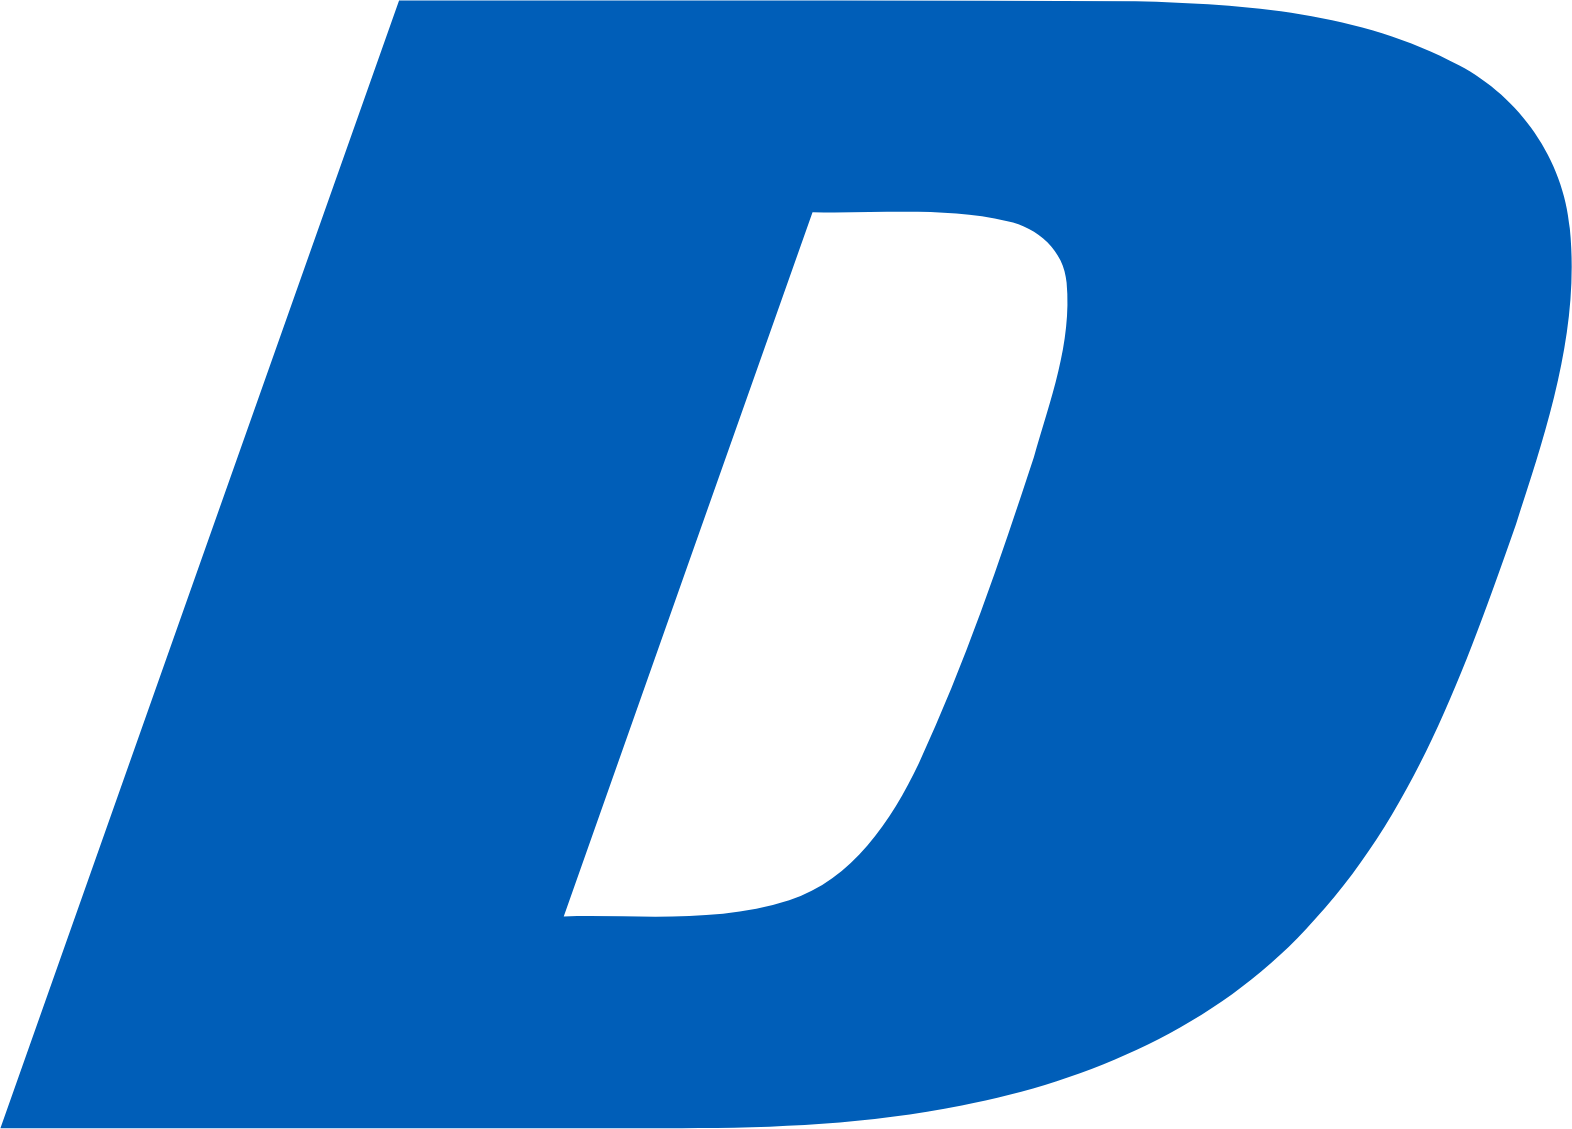 Doosan Enerbility logo (transparent PNG)